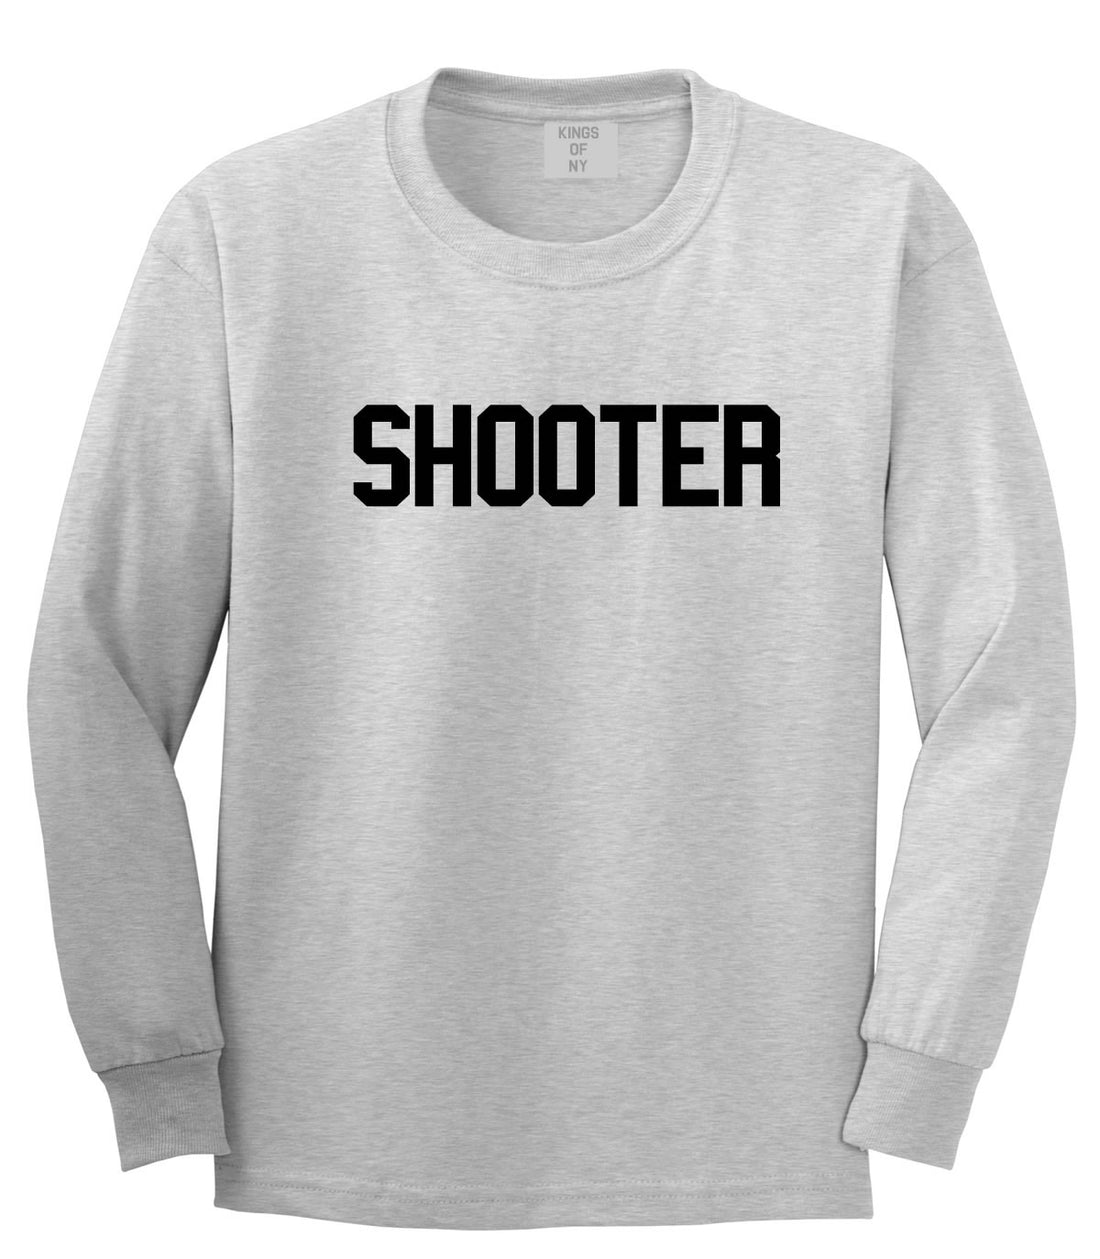 Shooter Long Sleeve T-Shirt by Kings Of NY